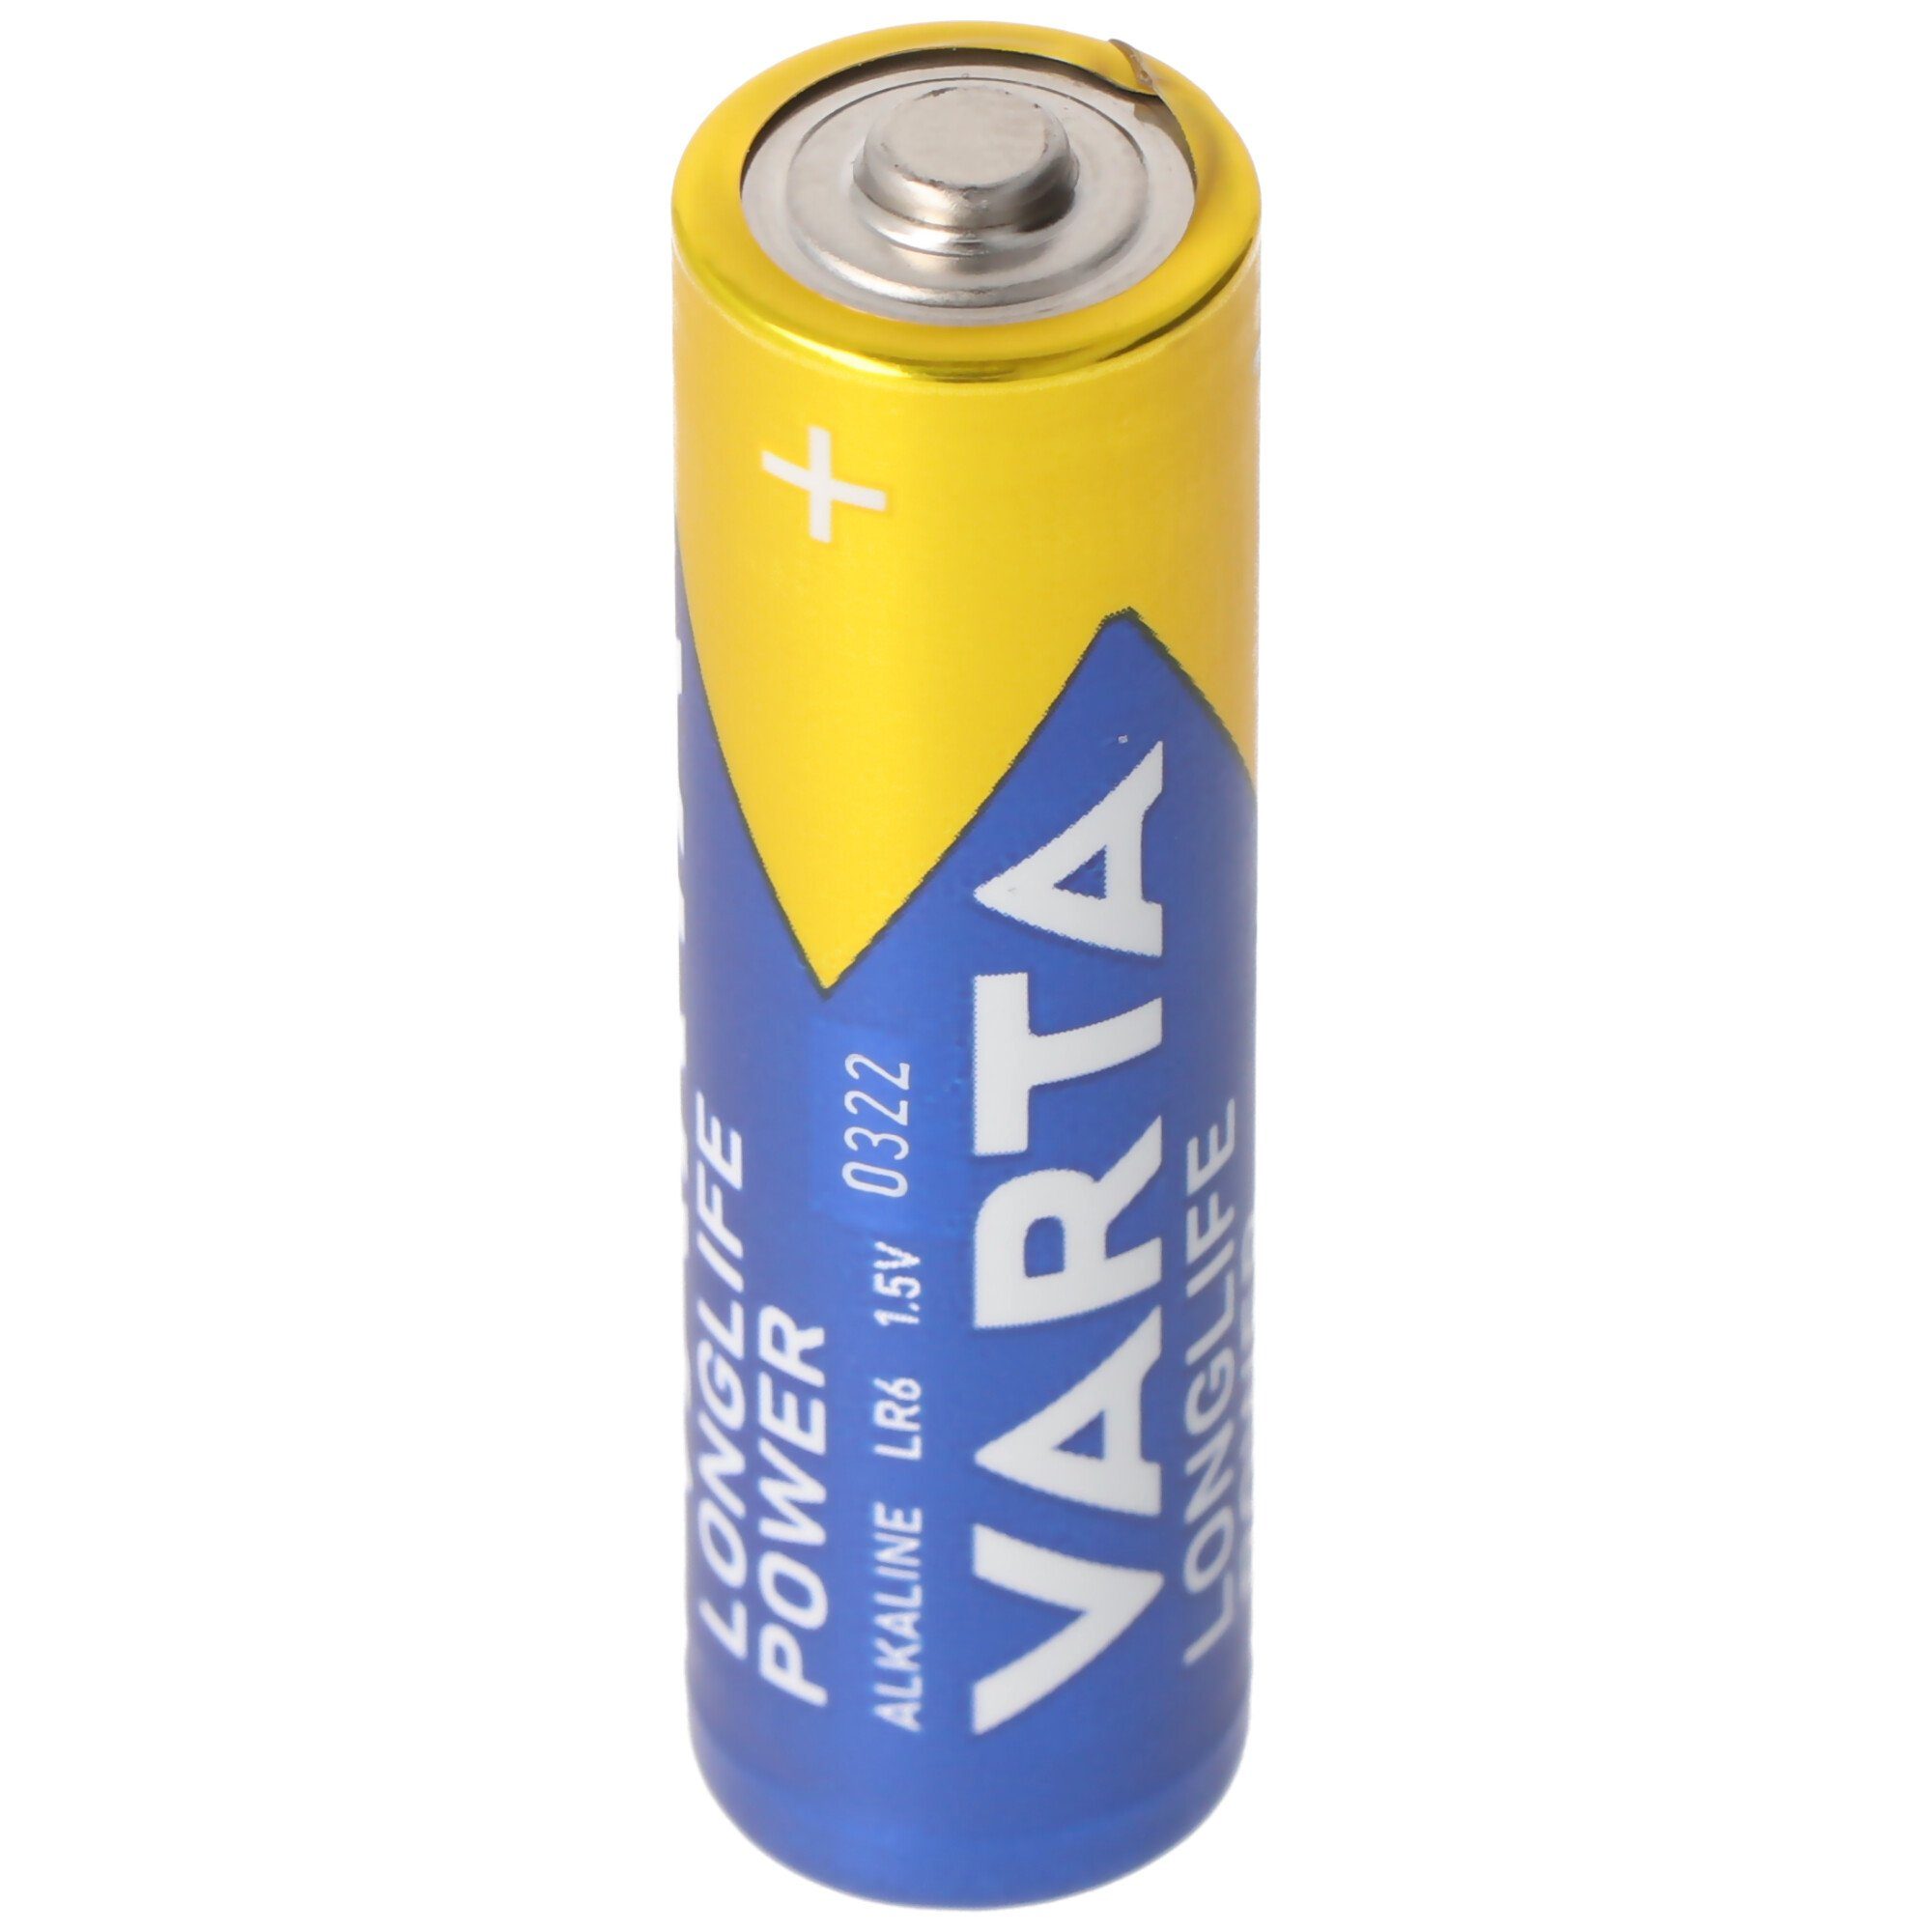 VARTA Varta Longlife Power (ehem. High Energy) Mignon AA Batterie lose Ware Batterie, (1,5 V)